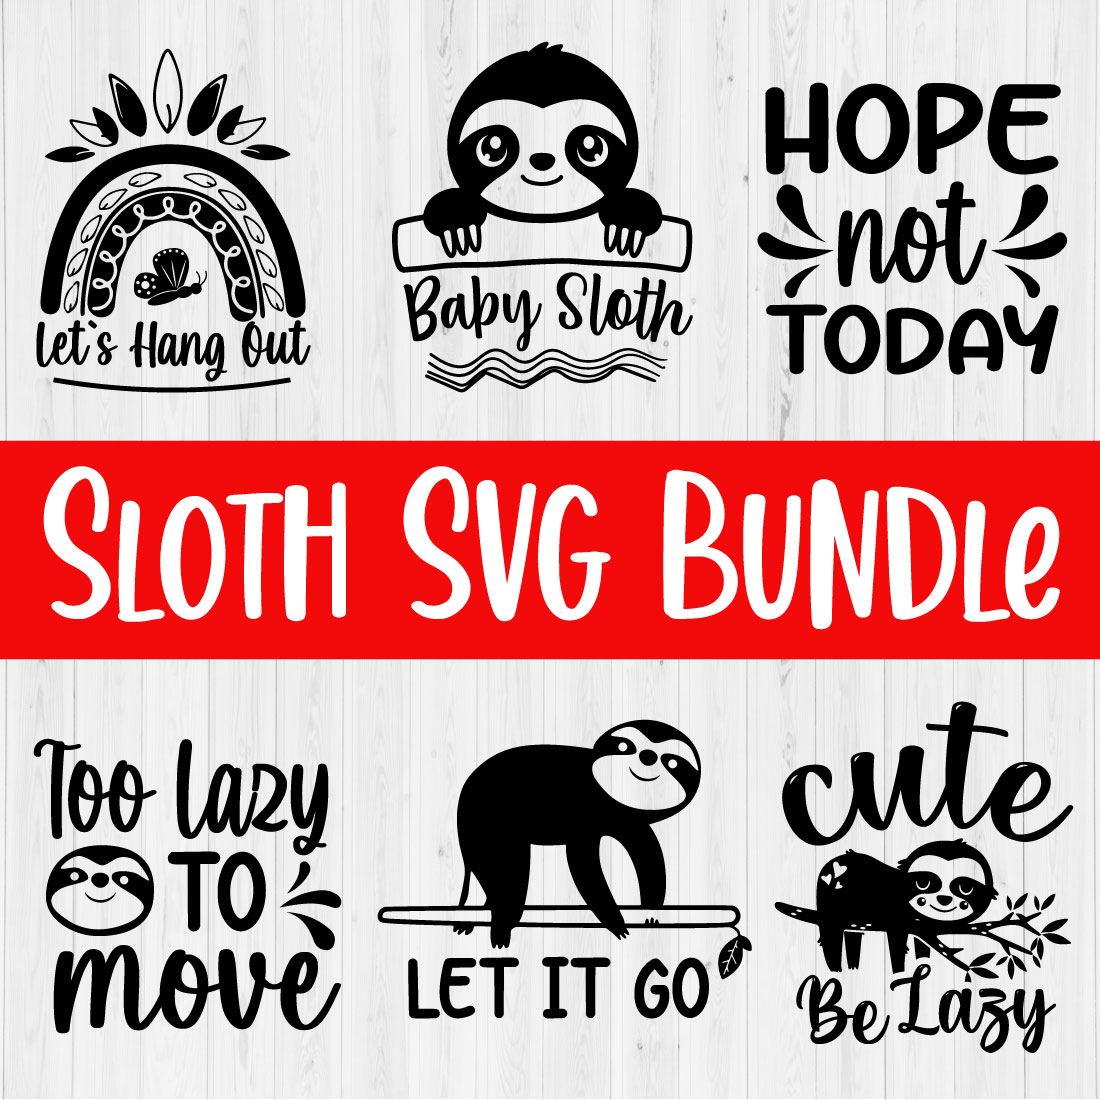 Sloth Svg Design Bundle Vol2 preview image.